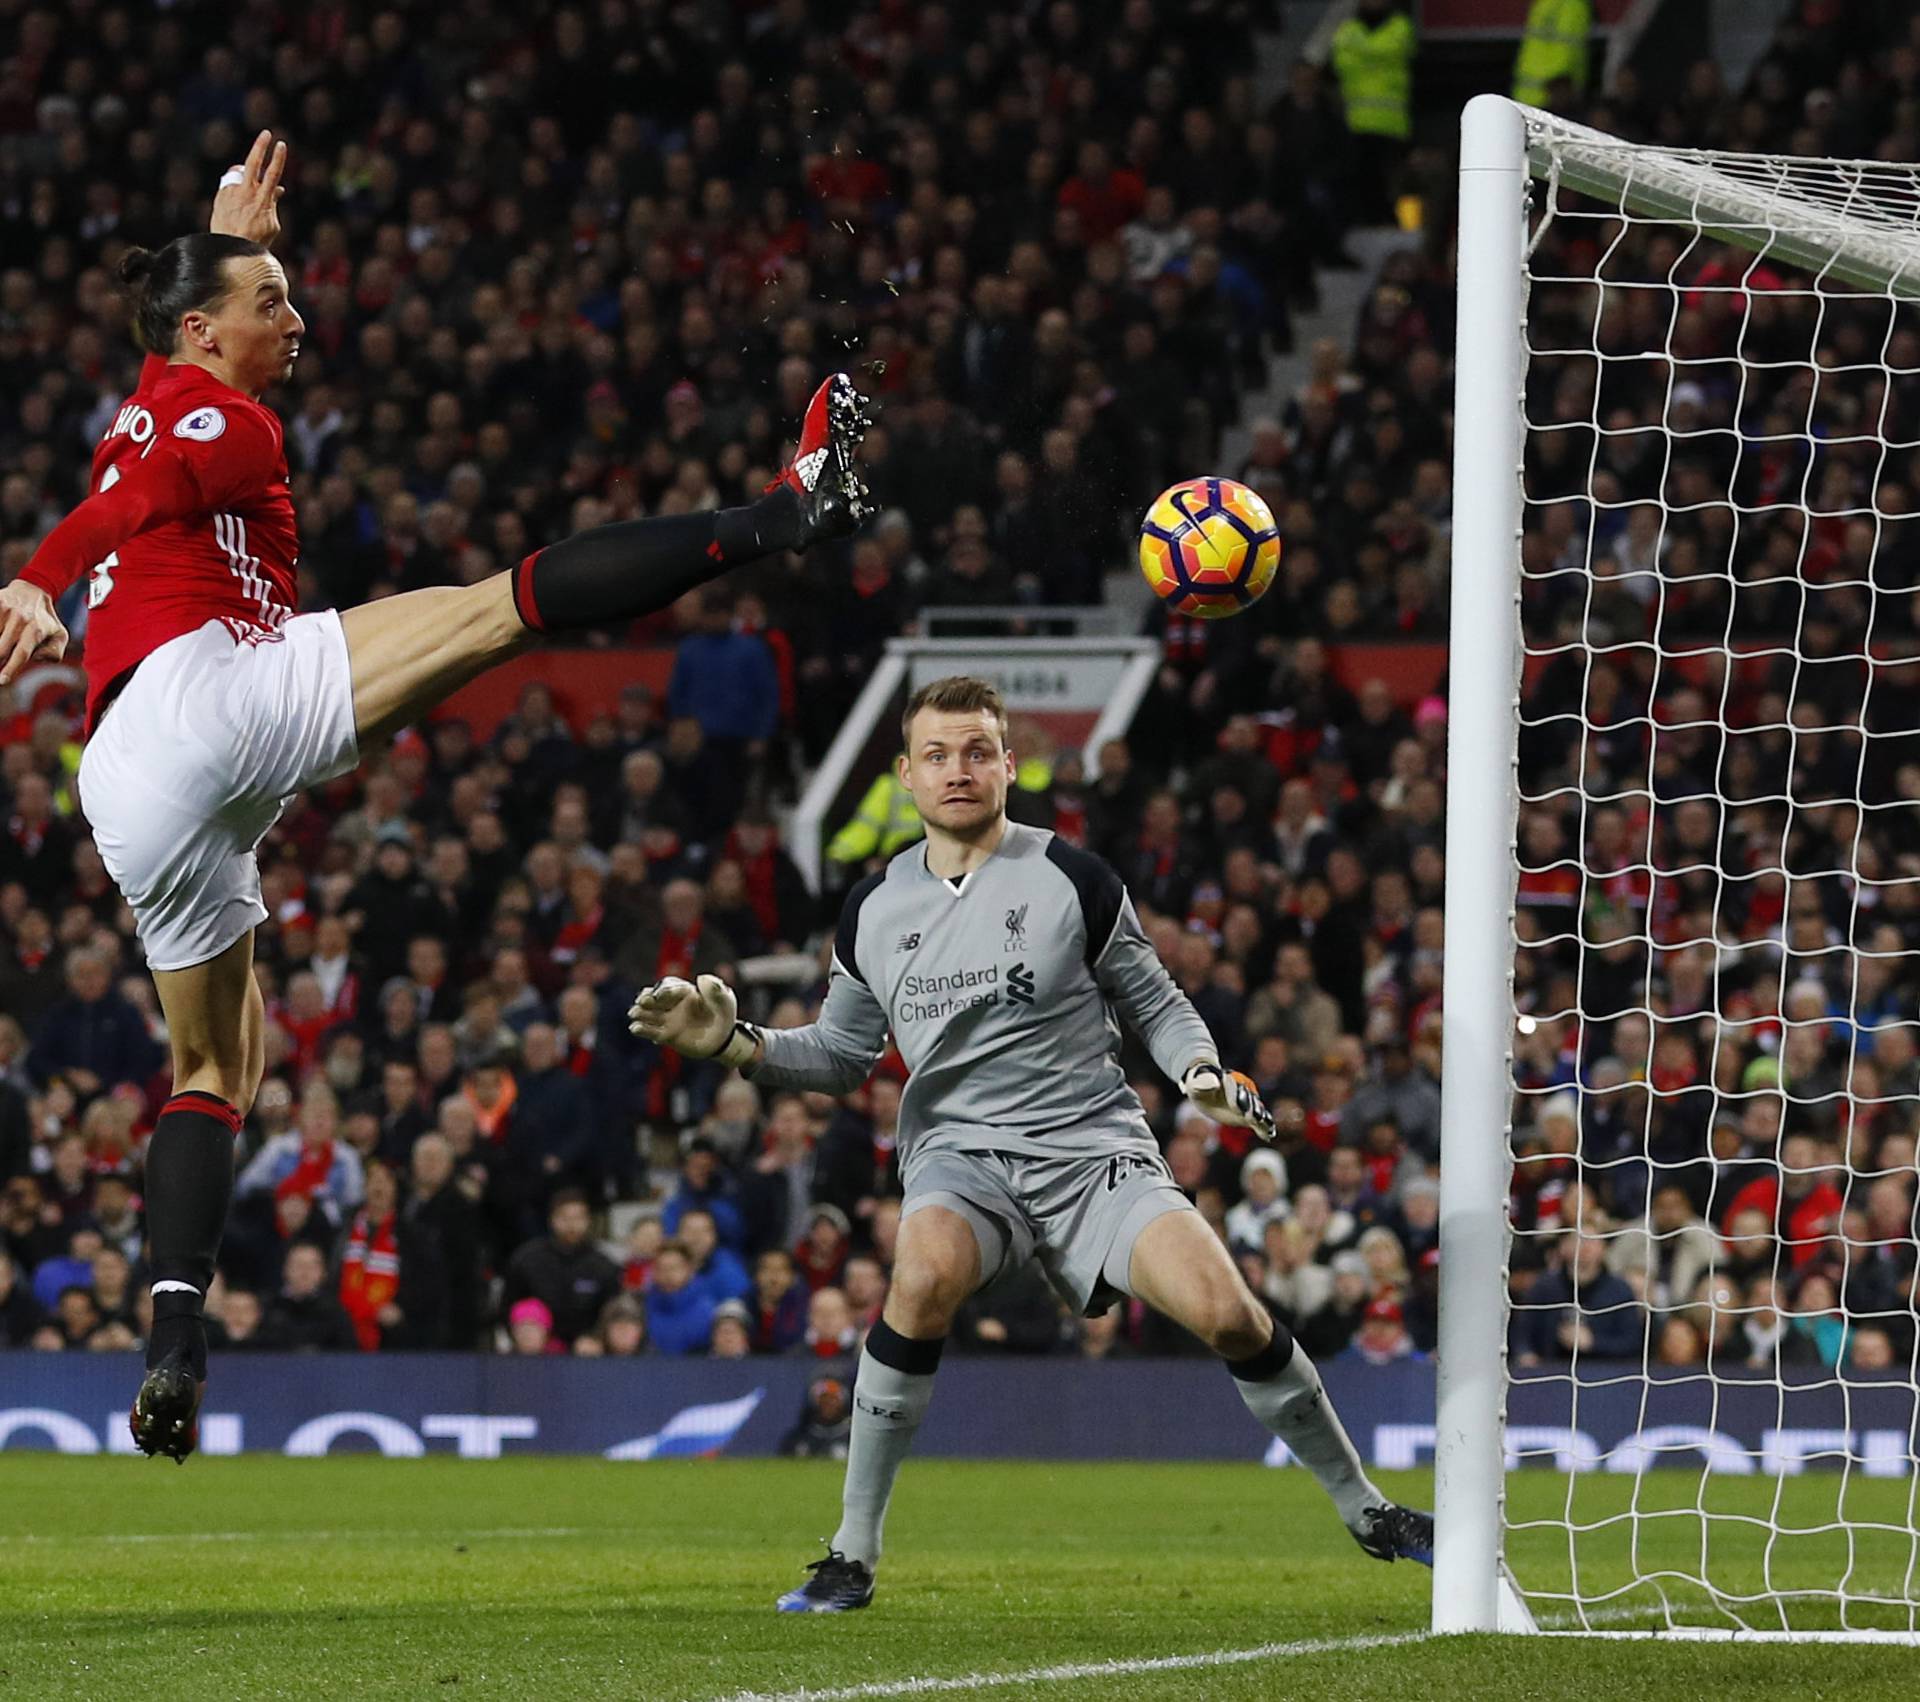 Manchester United's Zlatan Ibrahimovic shoots at goal